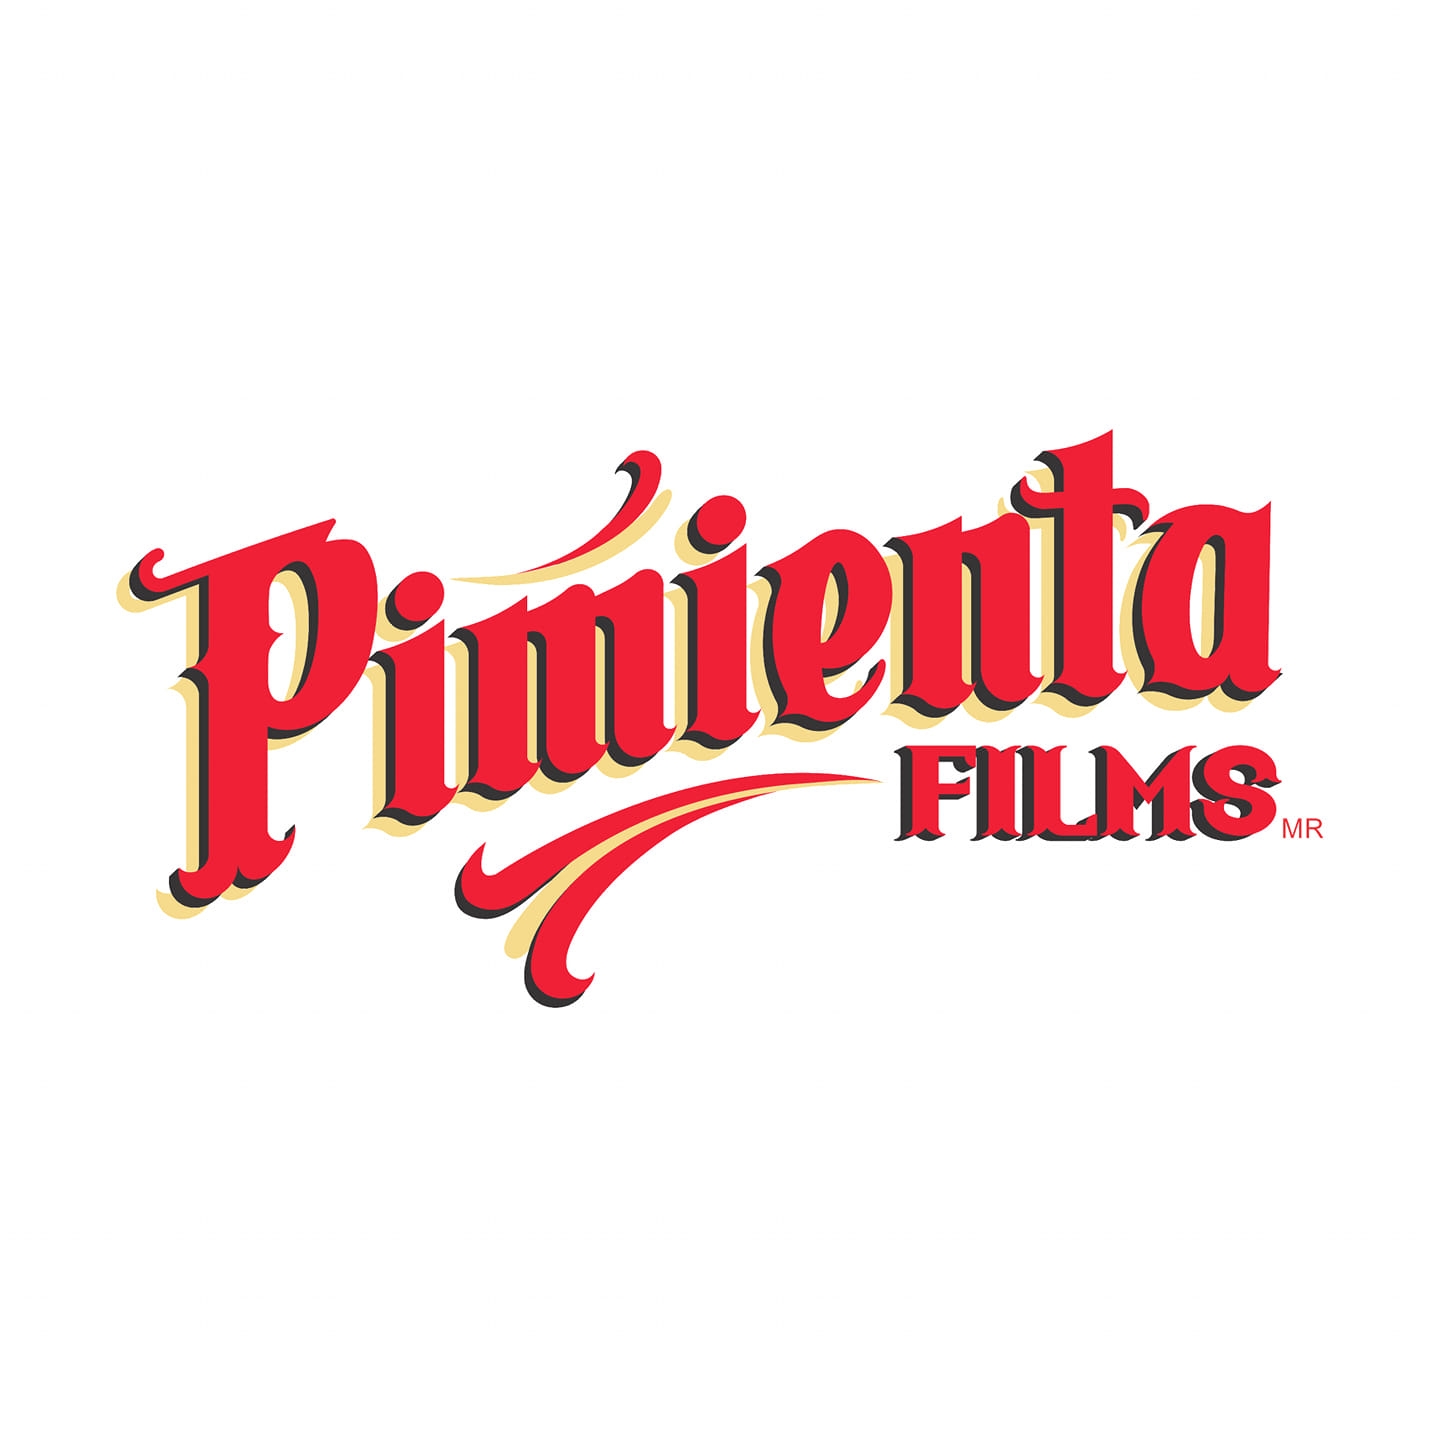 Pimienta Films